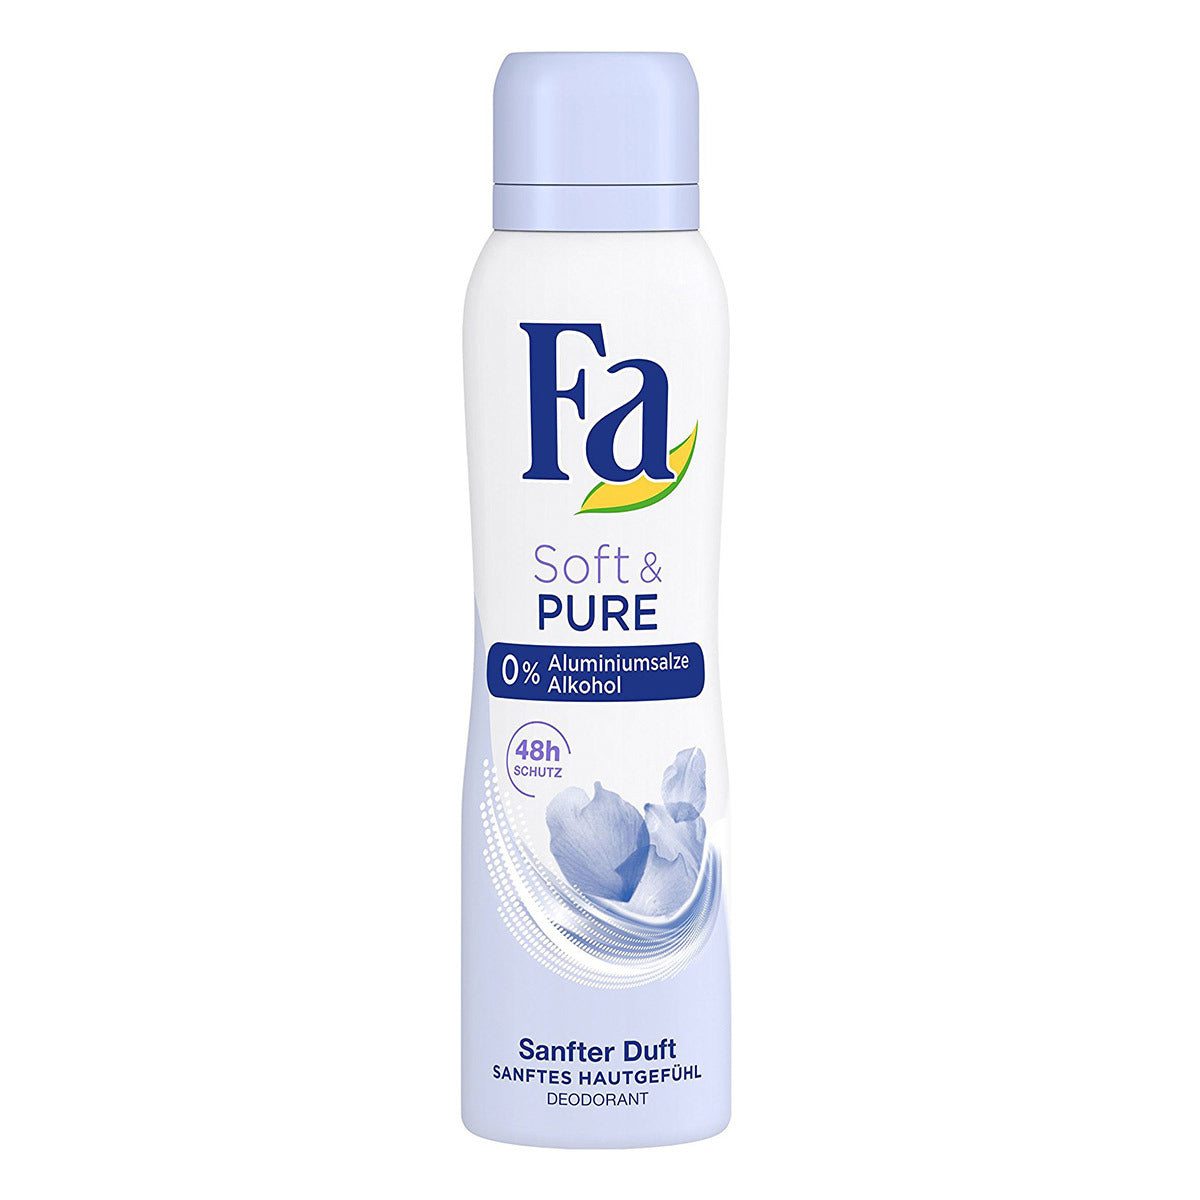 Primary image of Soft + Pure Deodorant Spray